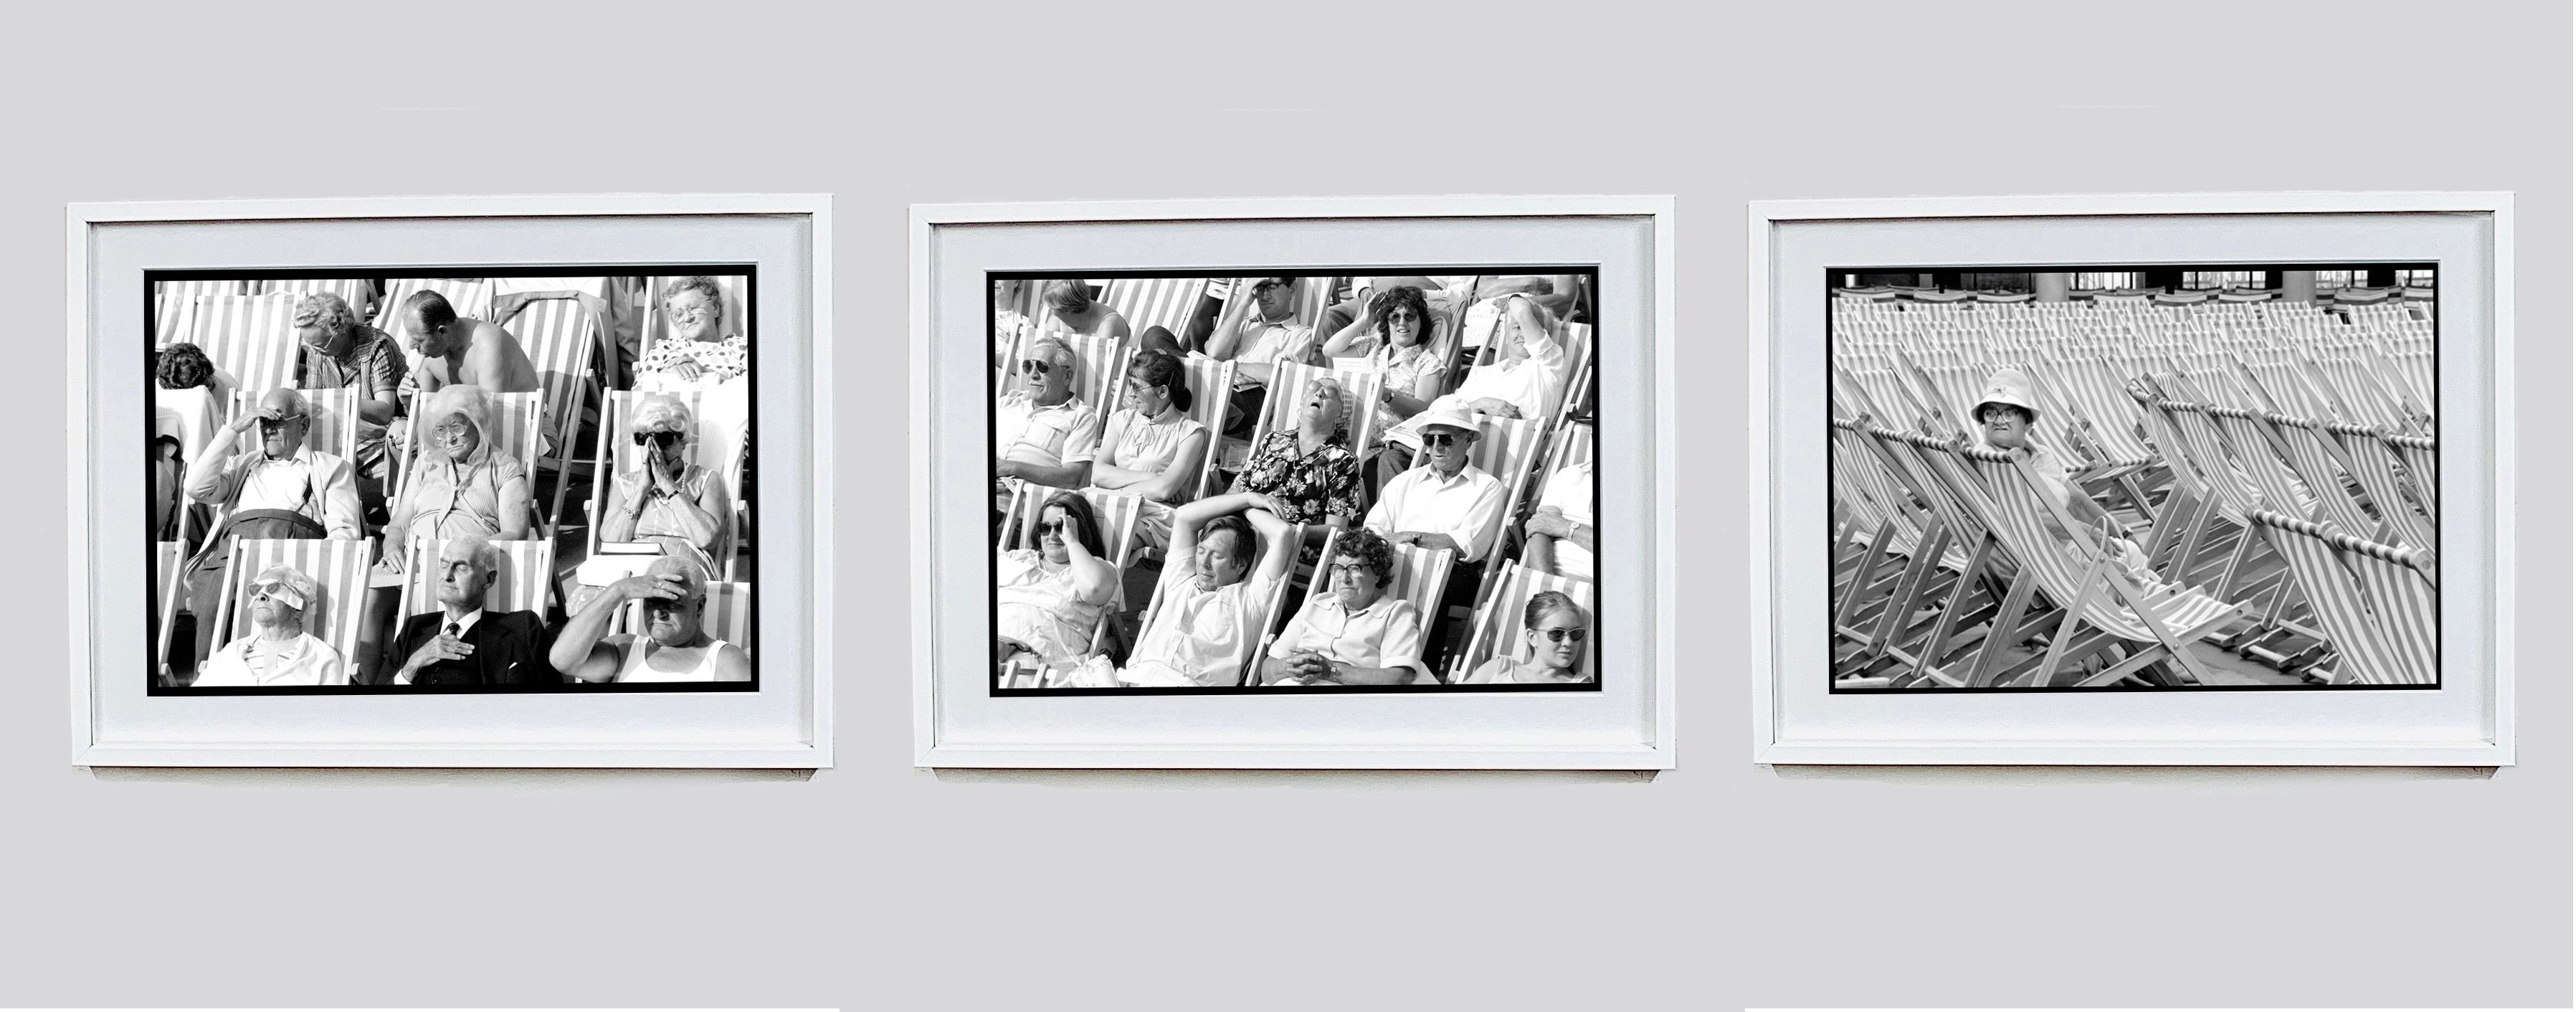 Bandstand I, Eastbourne, UK - Black and White Vintage Photography For Sale 3